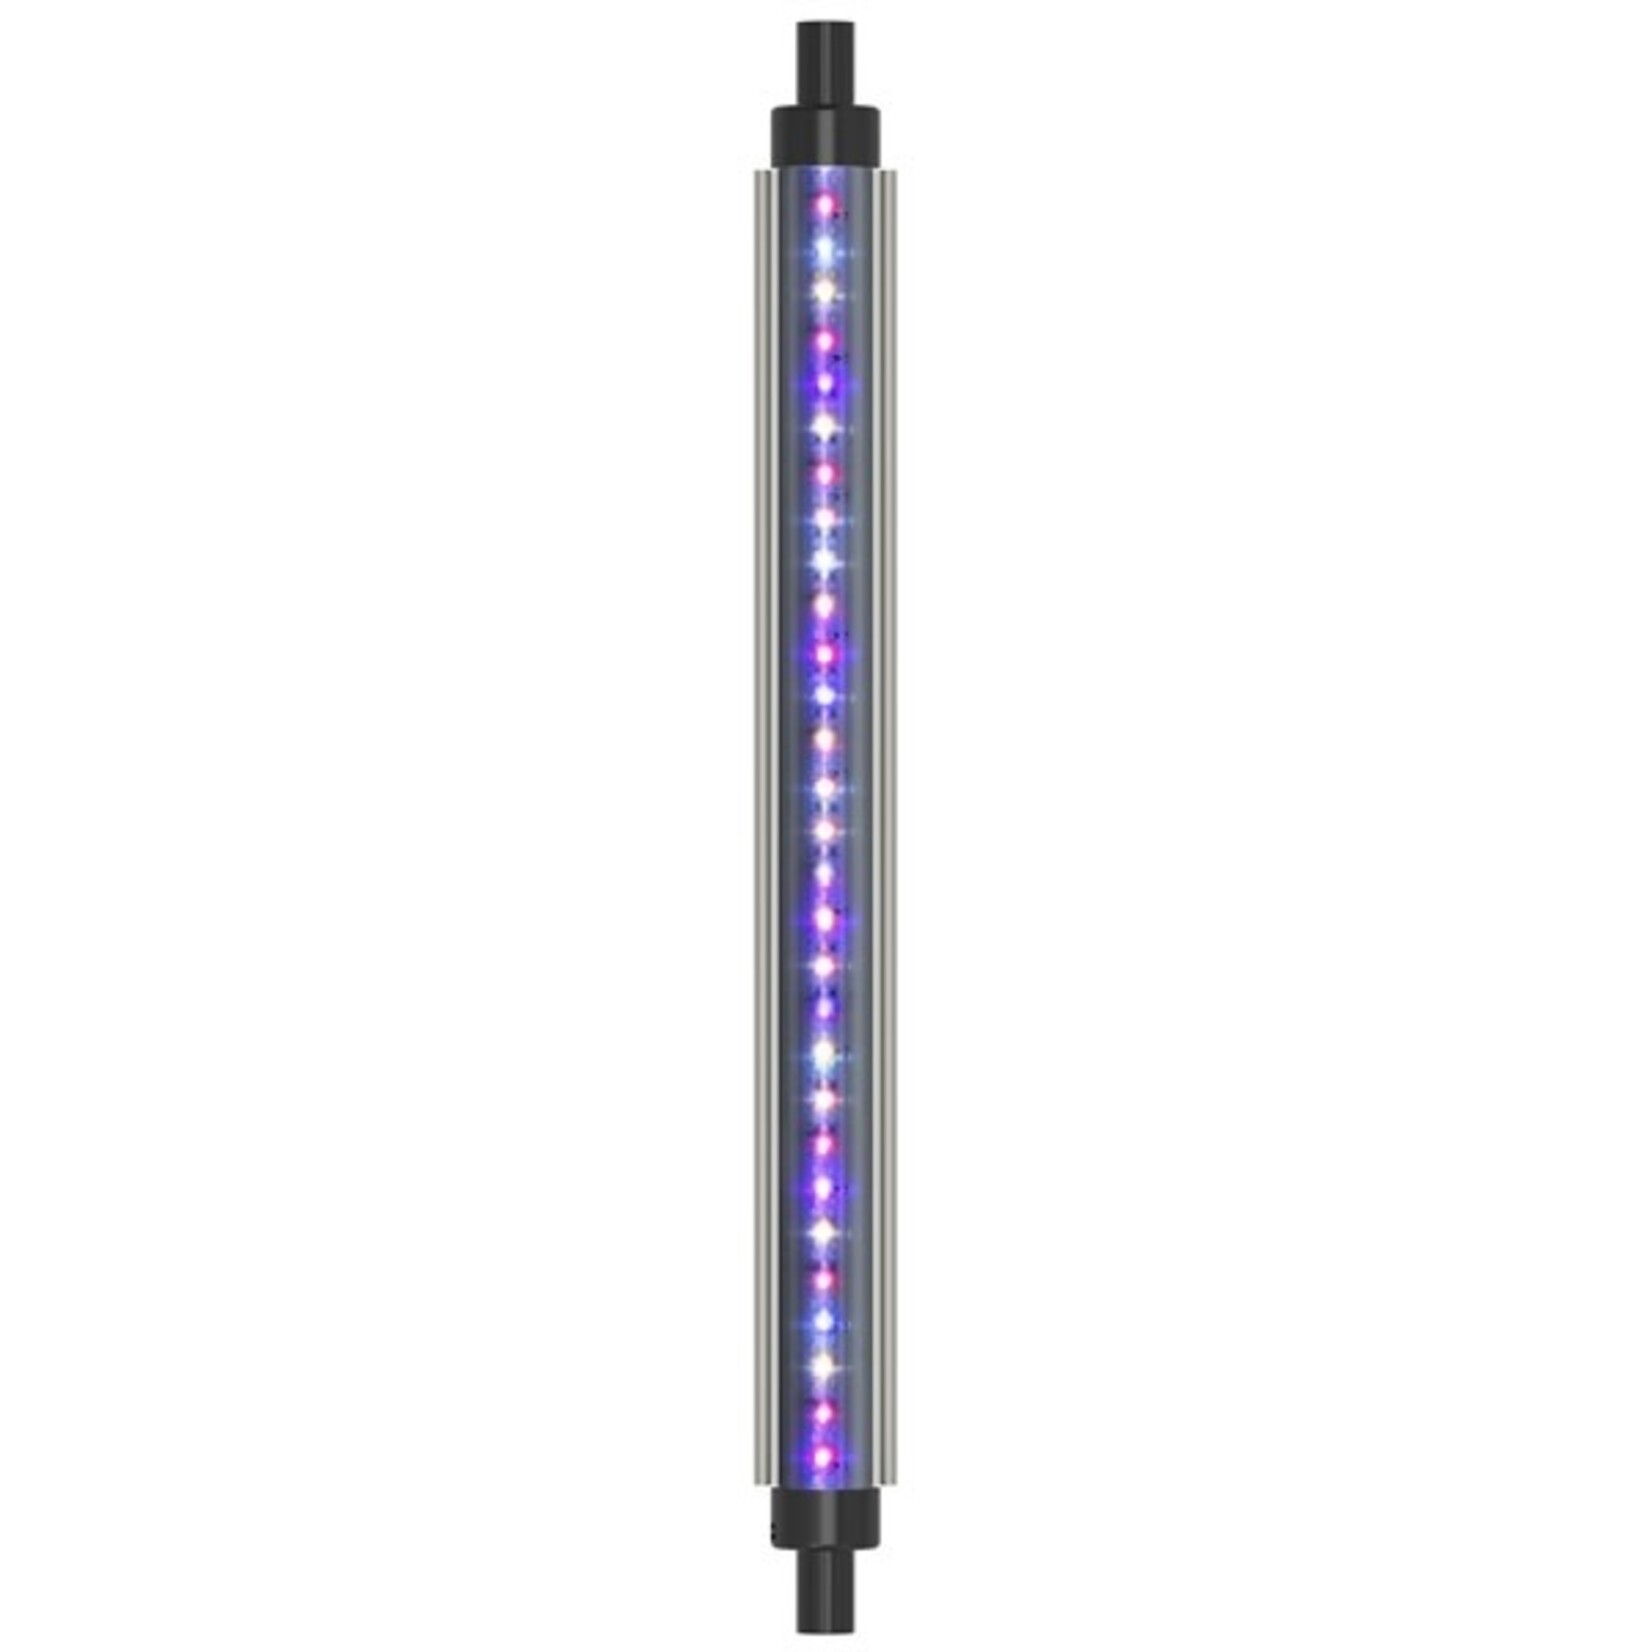 Aquatlantis Easy LED tube 1047 mm 12v-2.5a